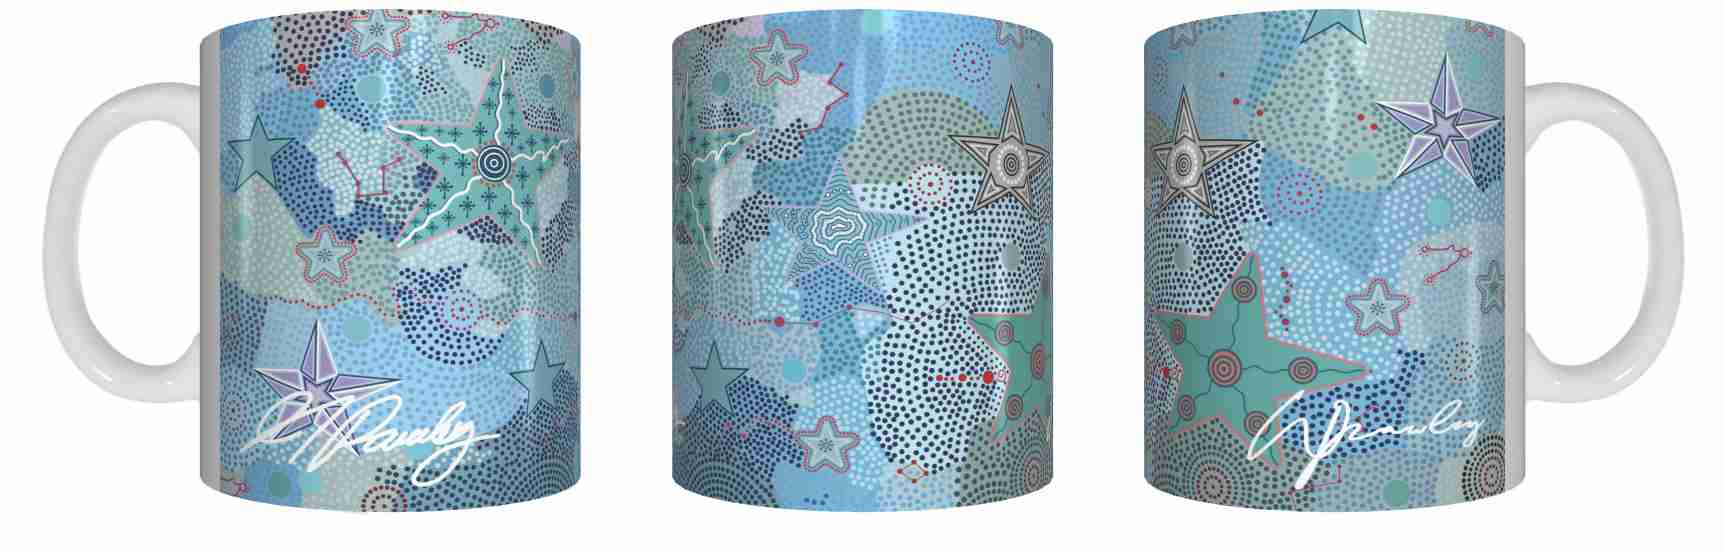 Dreamtime Stars - Ceramic Mug in Gift Box